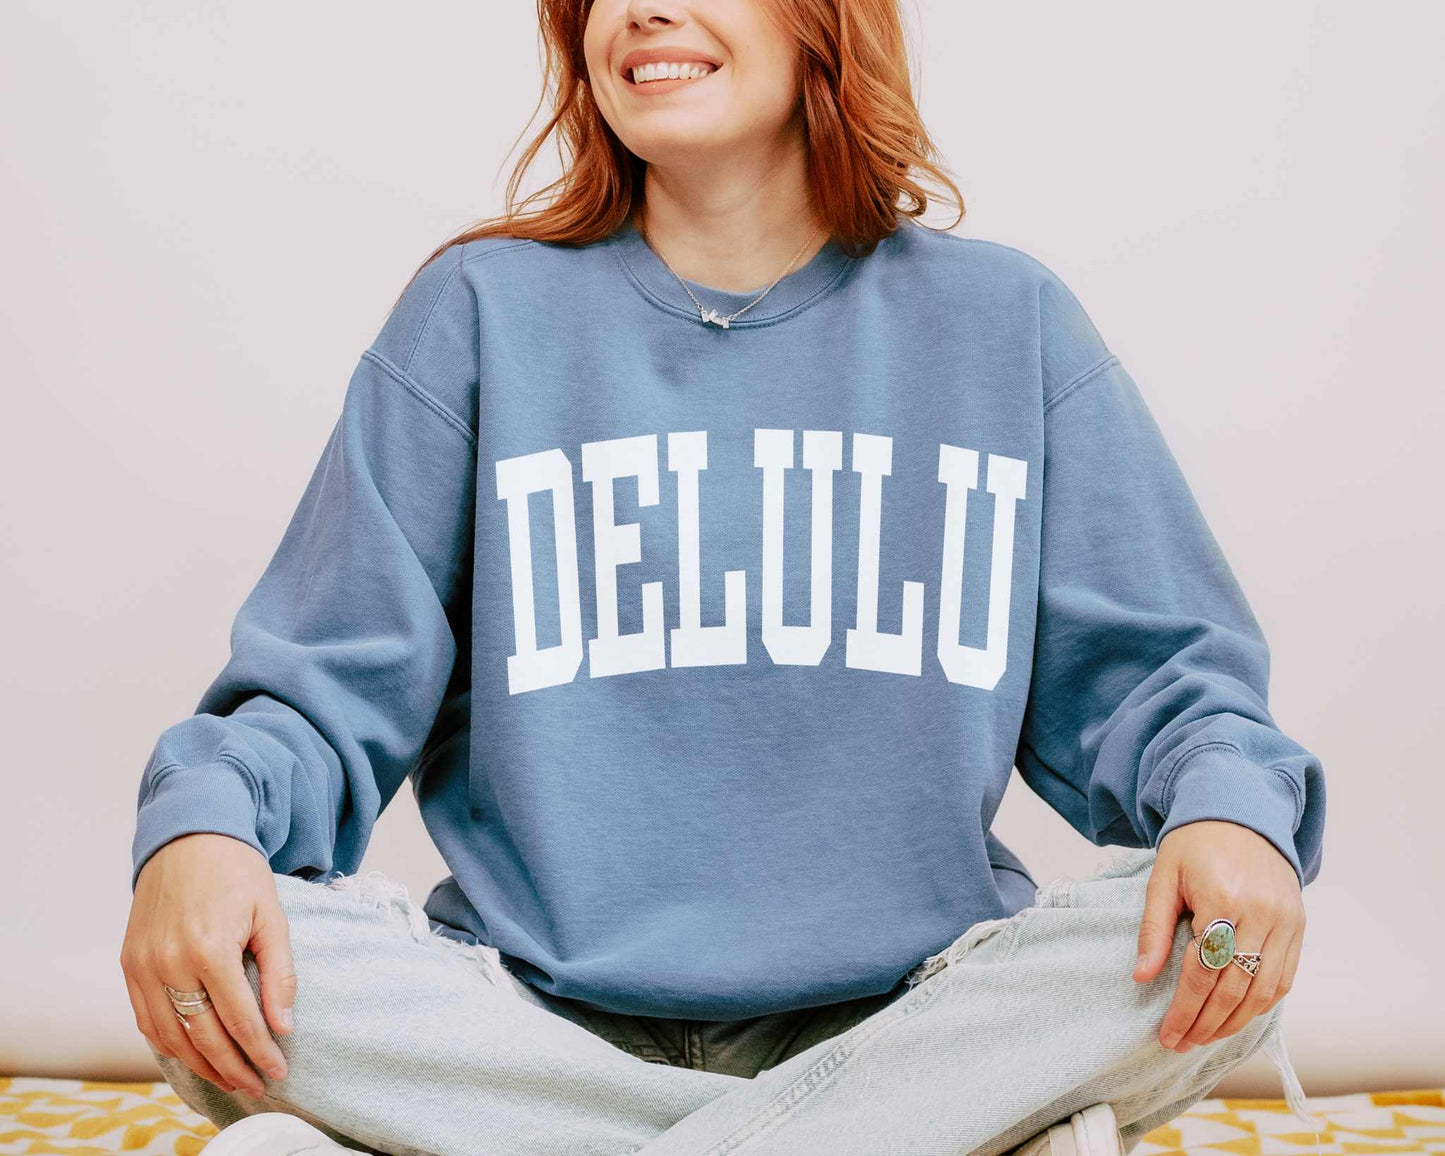 Delulu Delusional Preppy Comfort Colors Sweatshirt in Blue Jean.